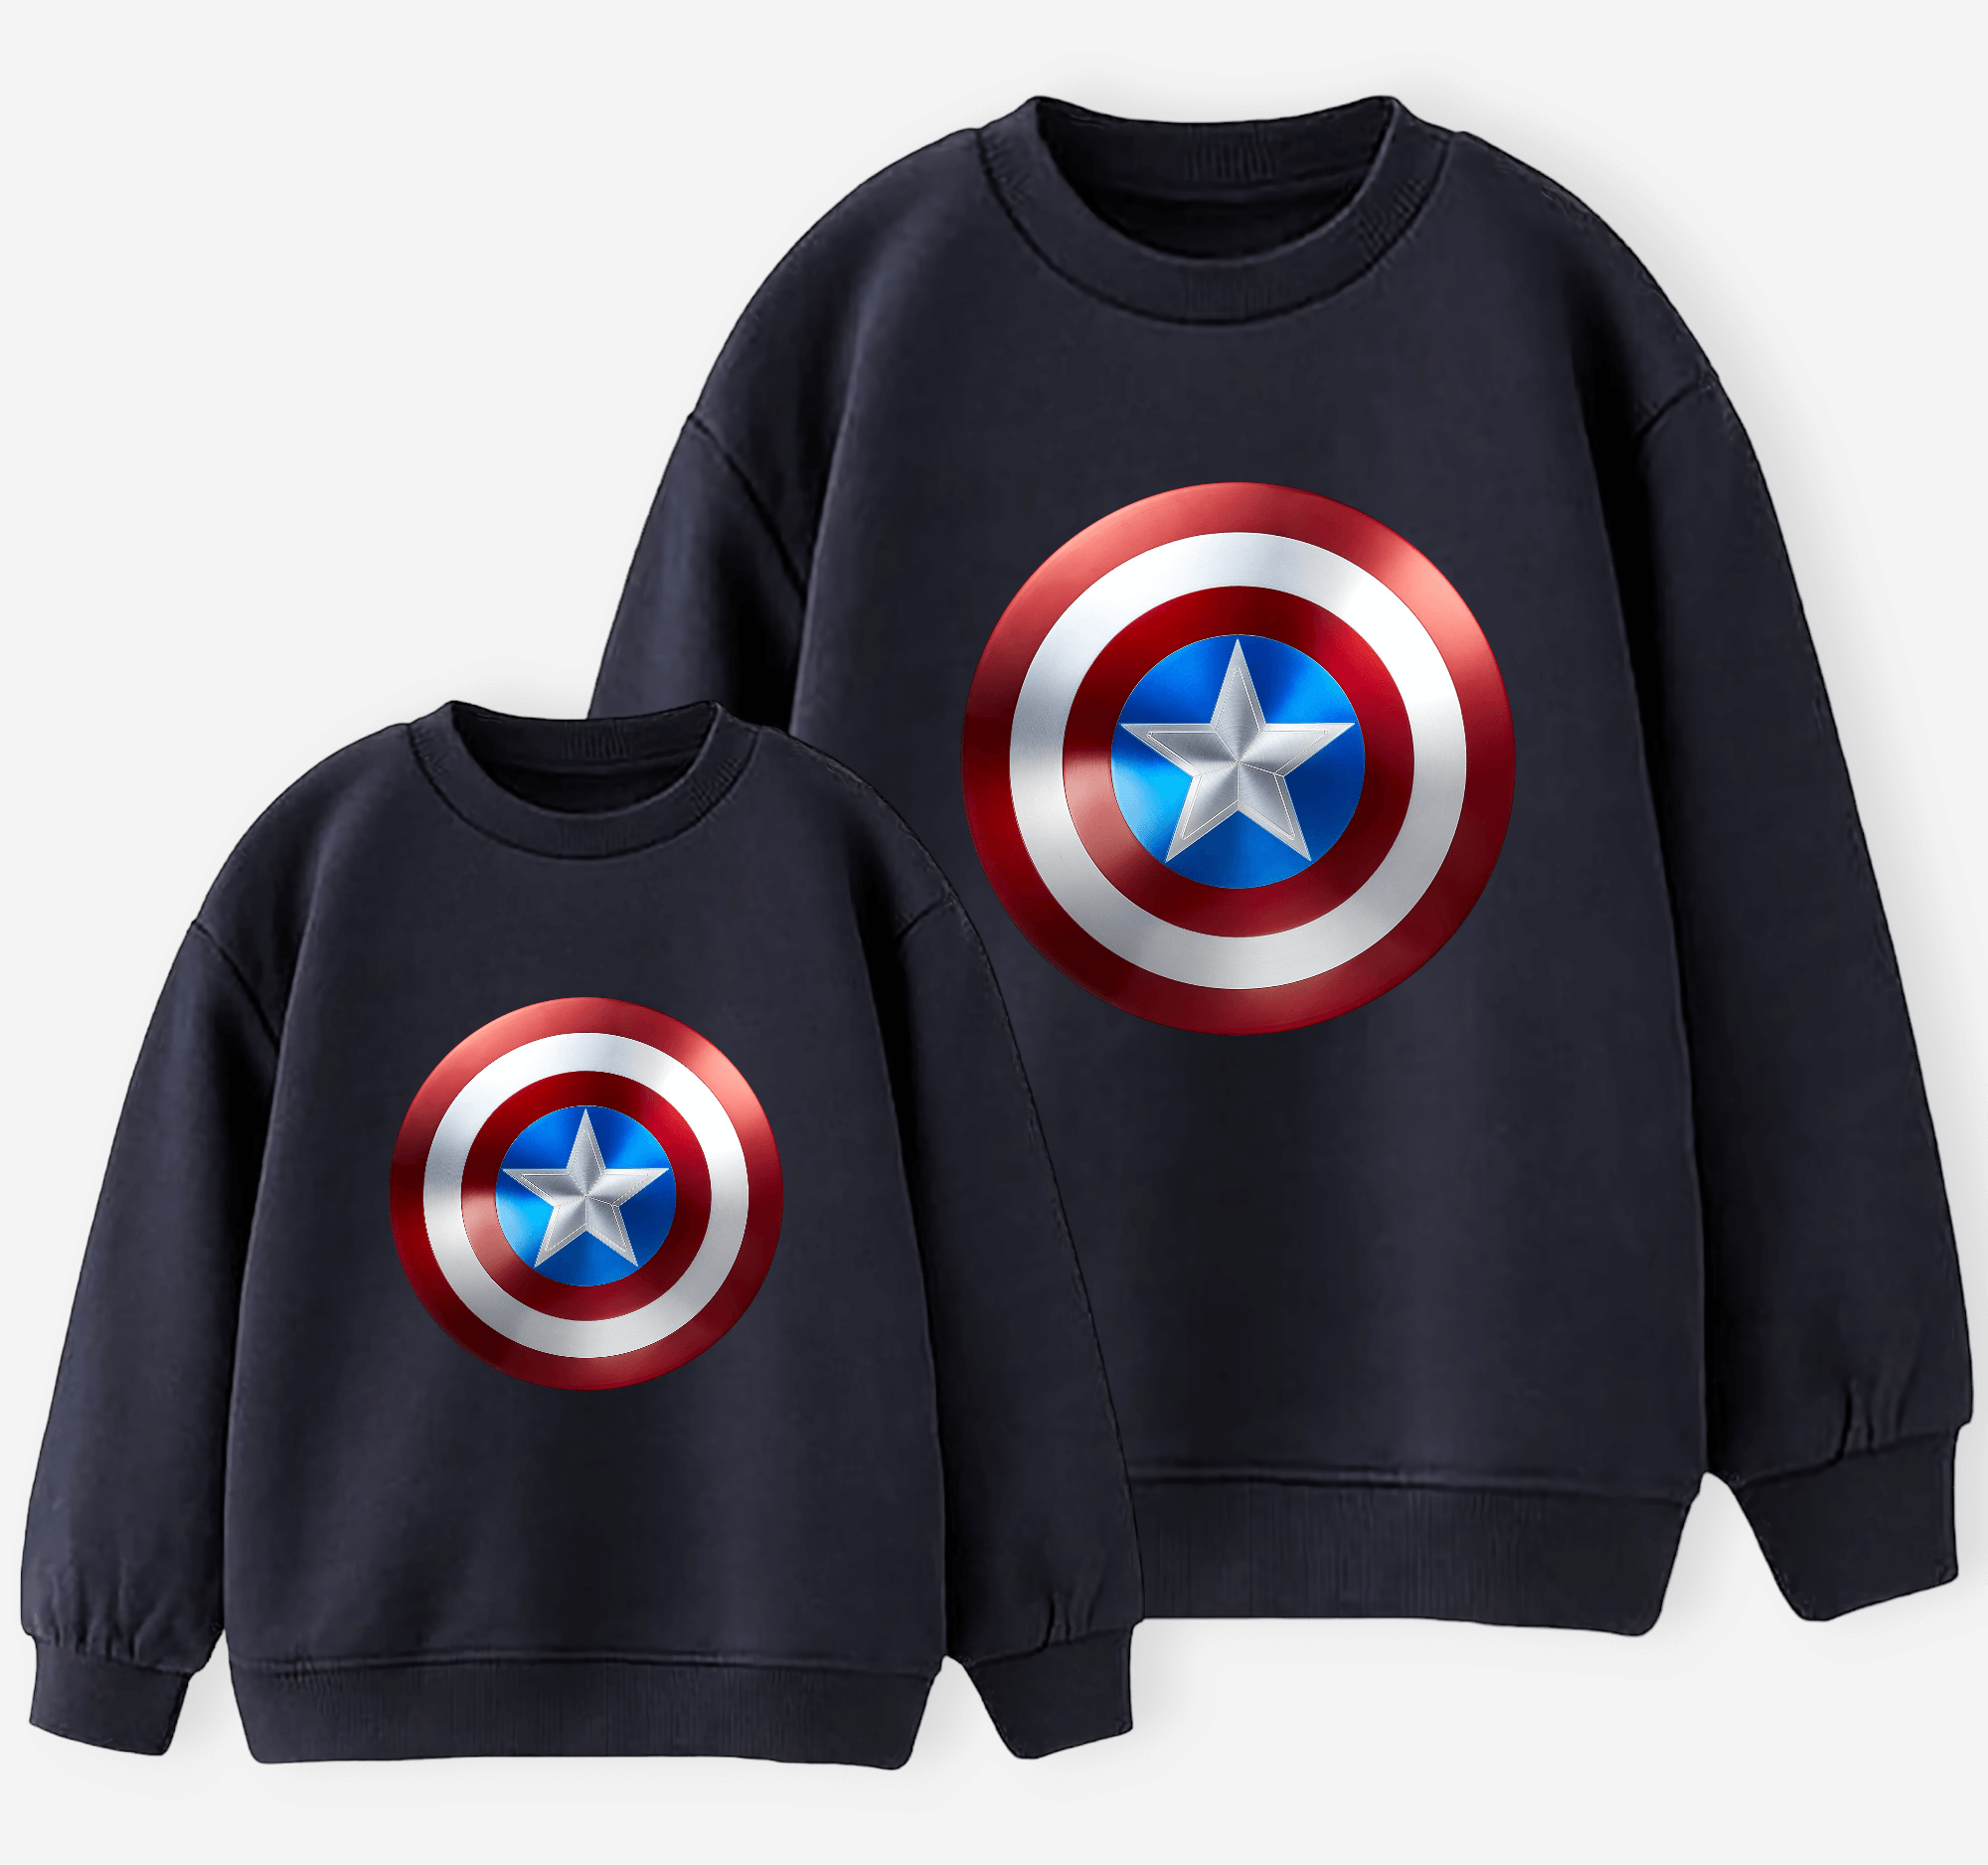 Captain America sweatshirt